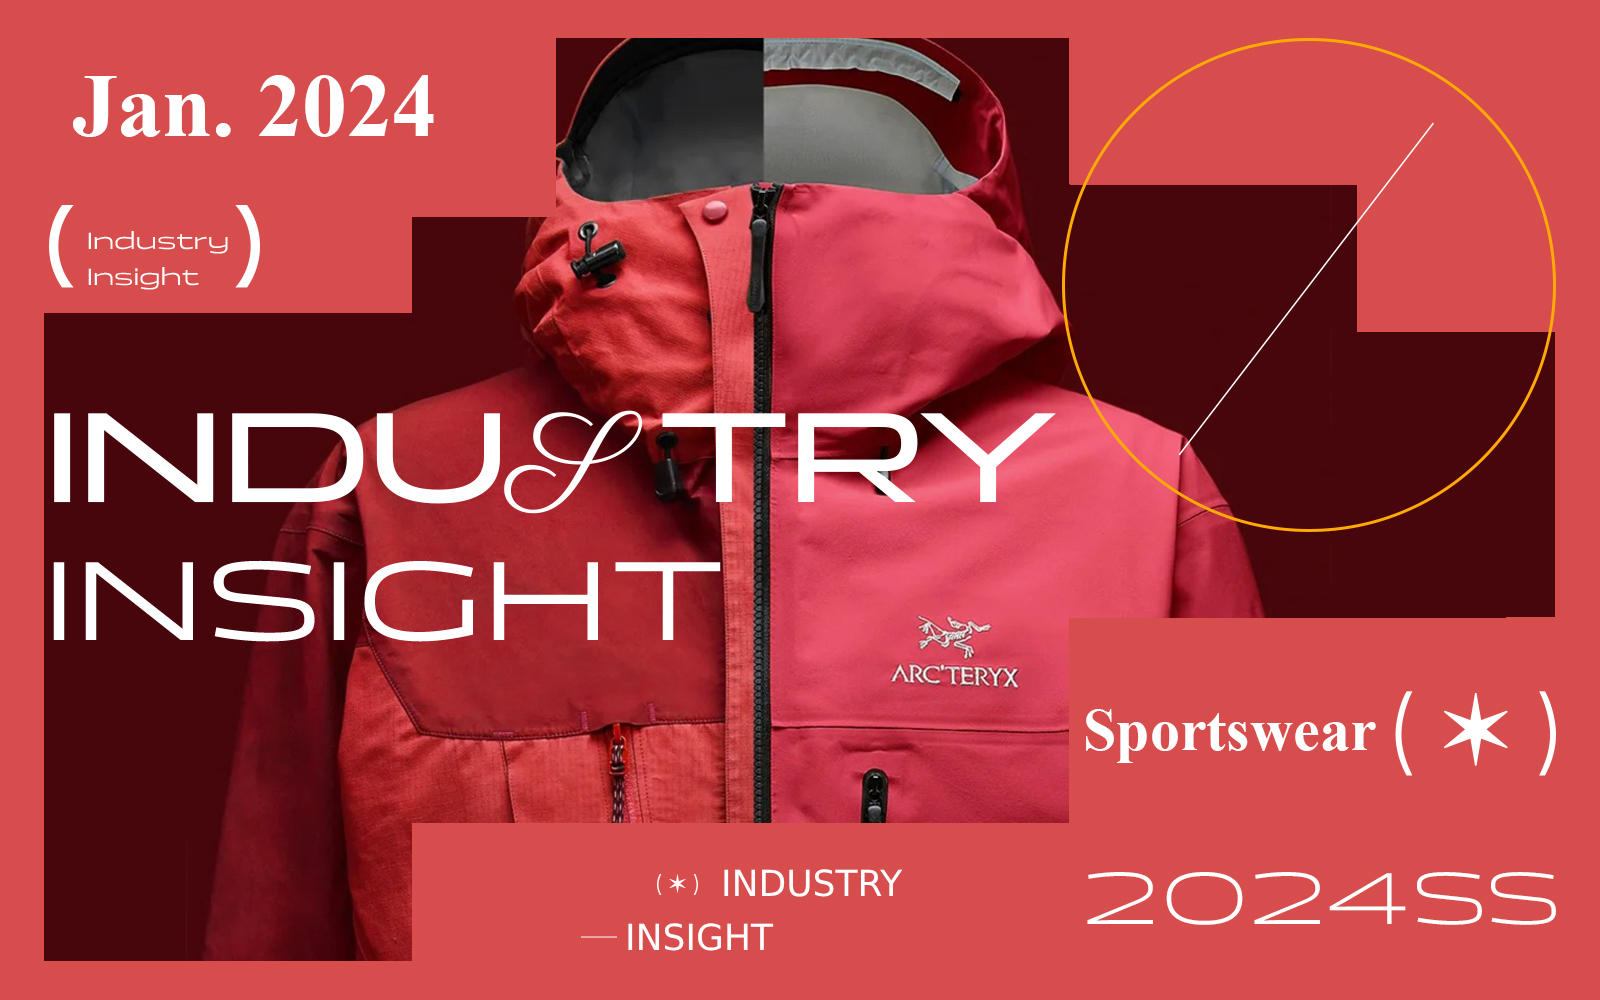 January 2024 -- The Industry Insight of Sportswear